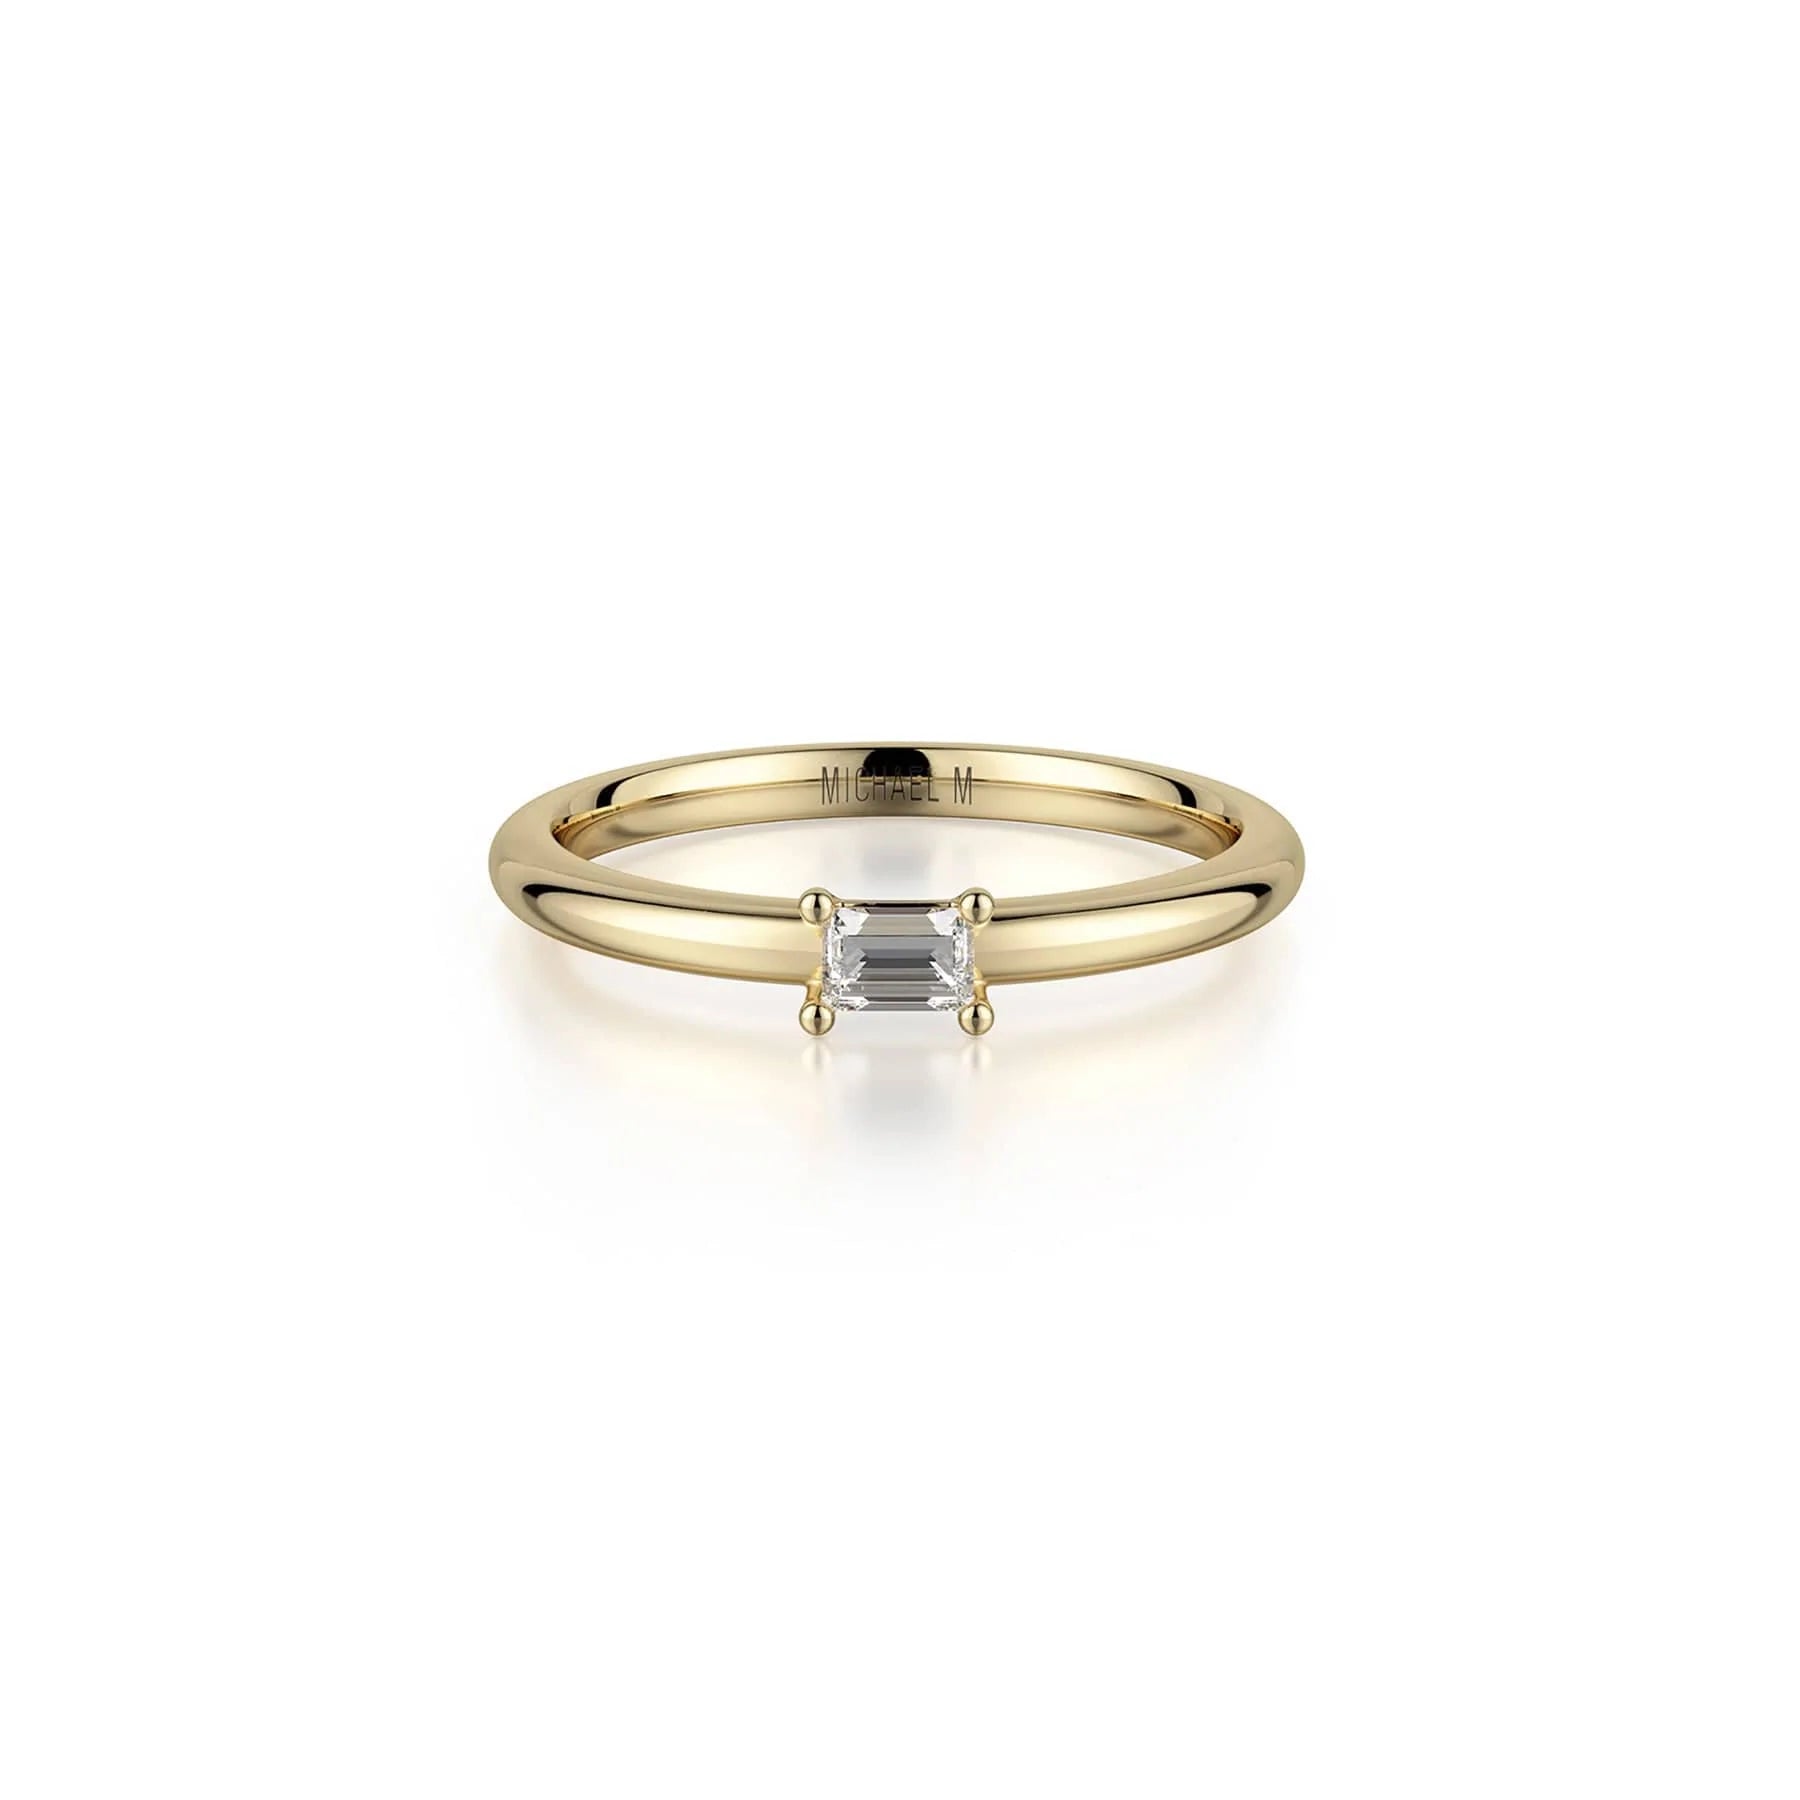 MICHAEL M Fashion Rings 14K Yellow Gold / 4 Petite Solitaire Diamond Ring B324-YG4